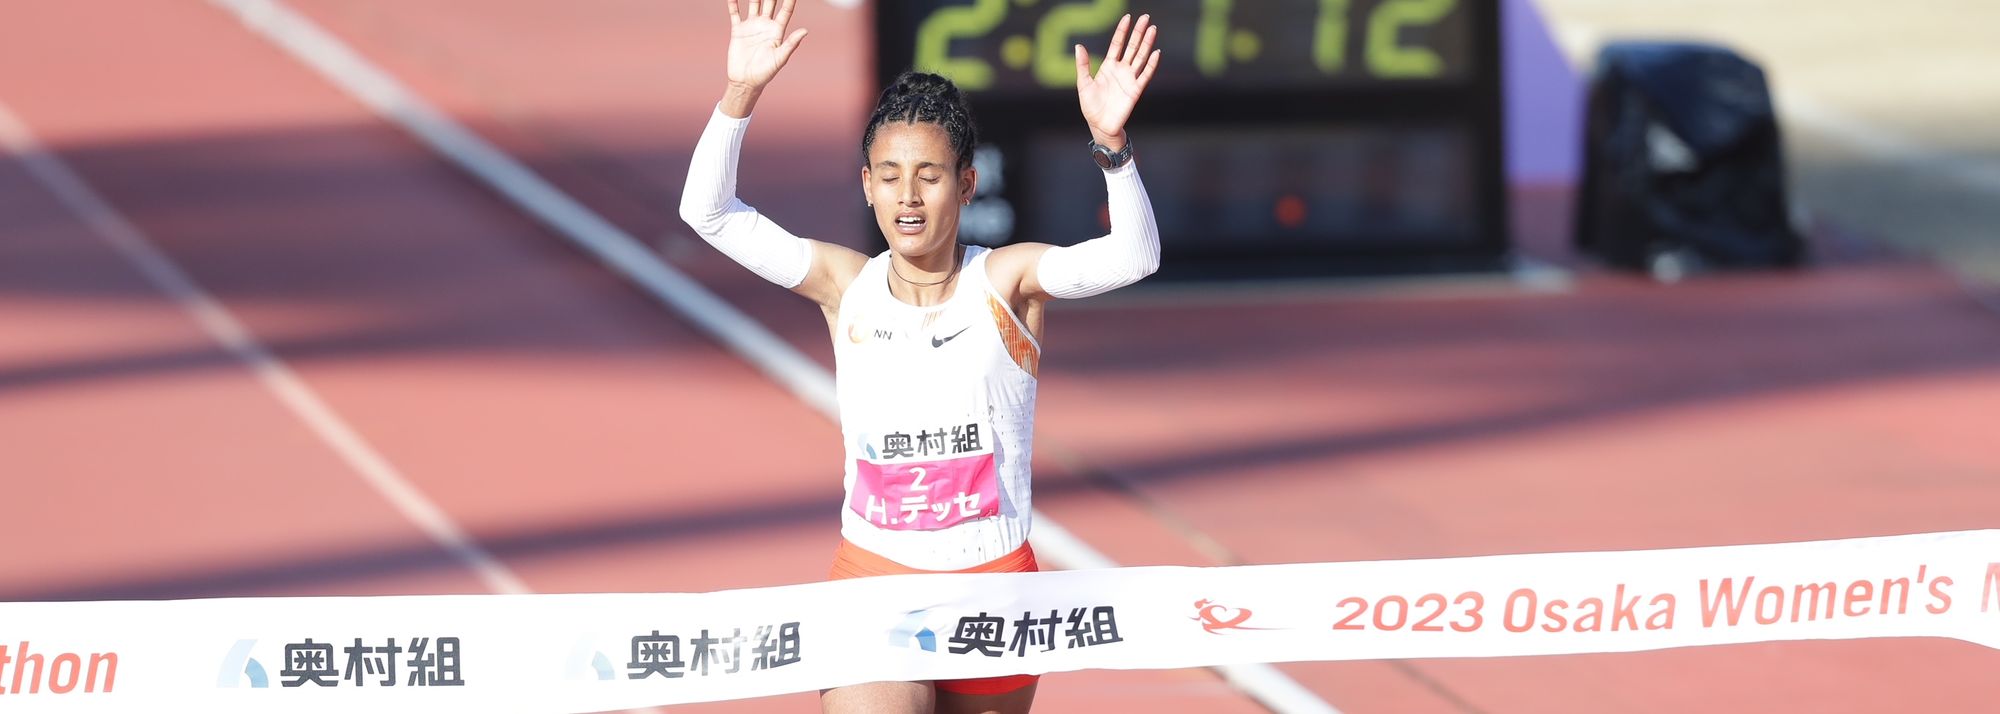 The Osaka Women’s Marathon is this year’s first World Athletics Platinum Label road race